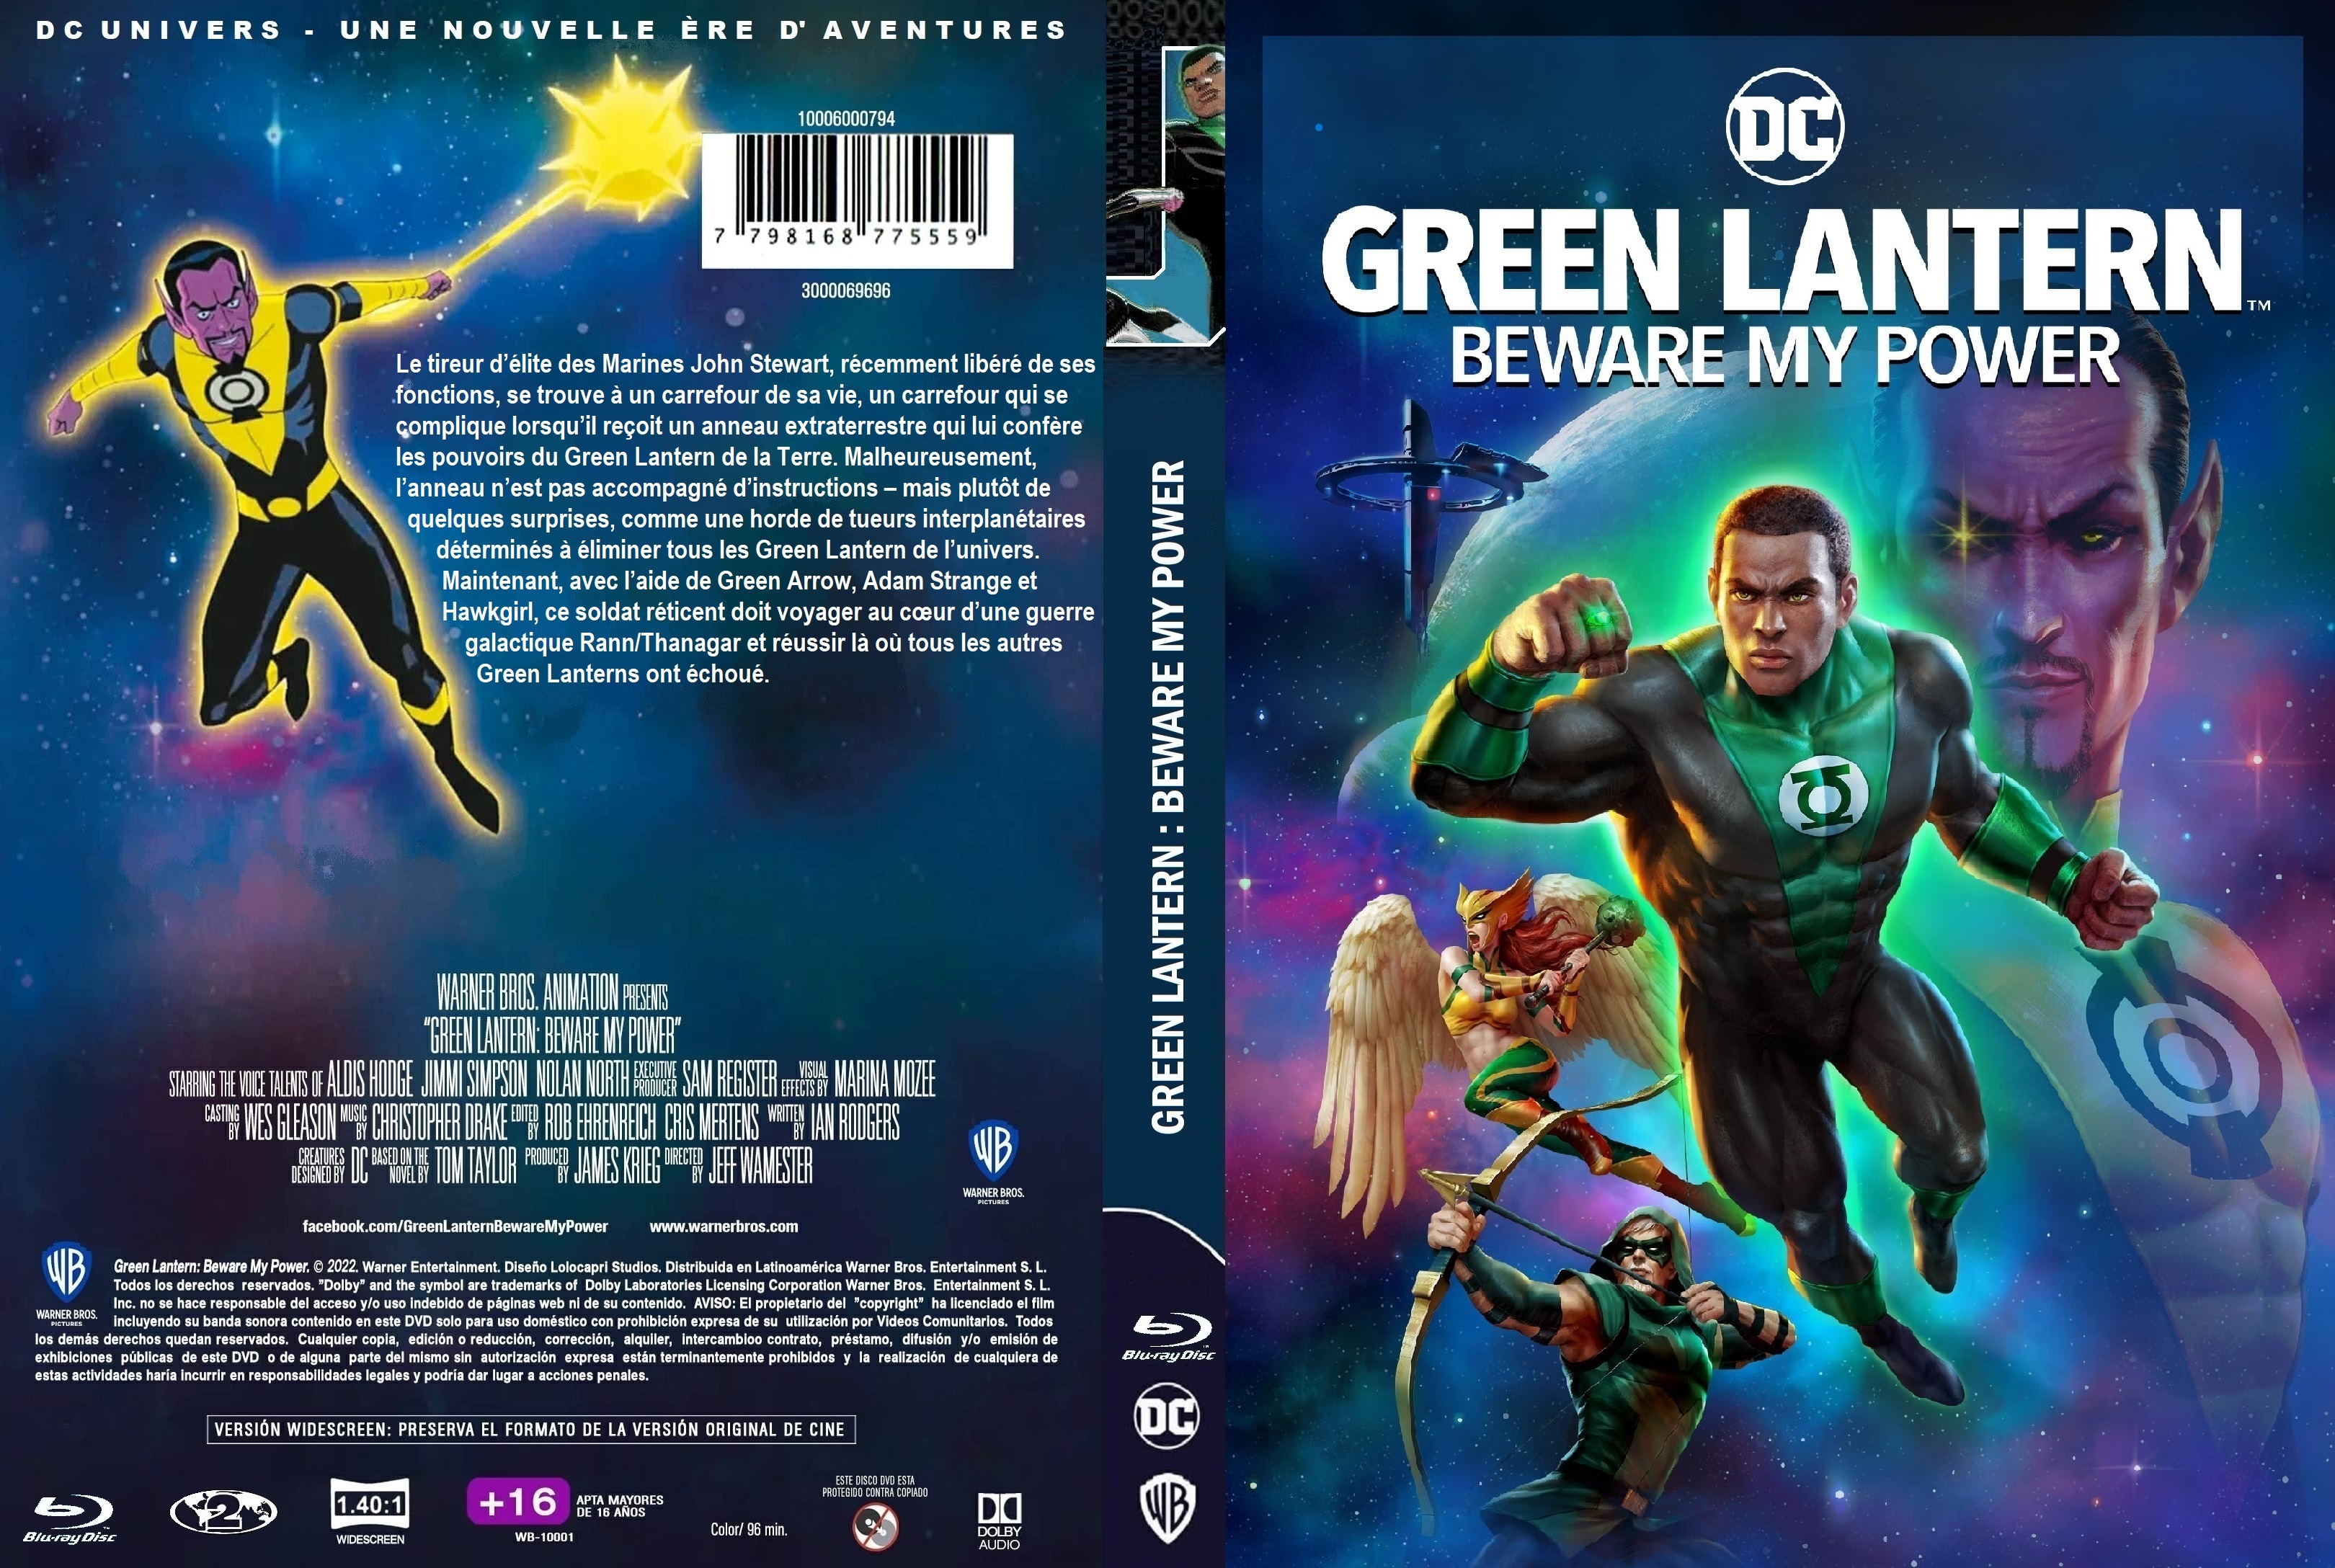 Jaquette DVD Green Lantern Beware my Power v2